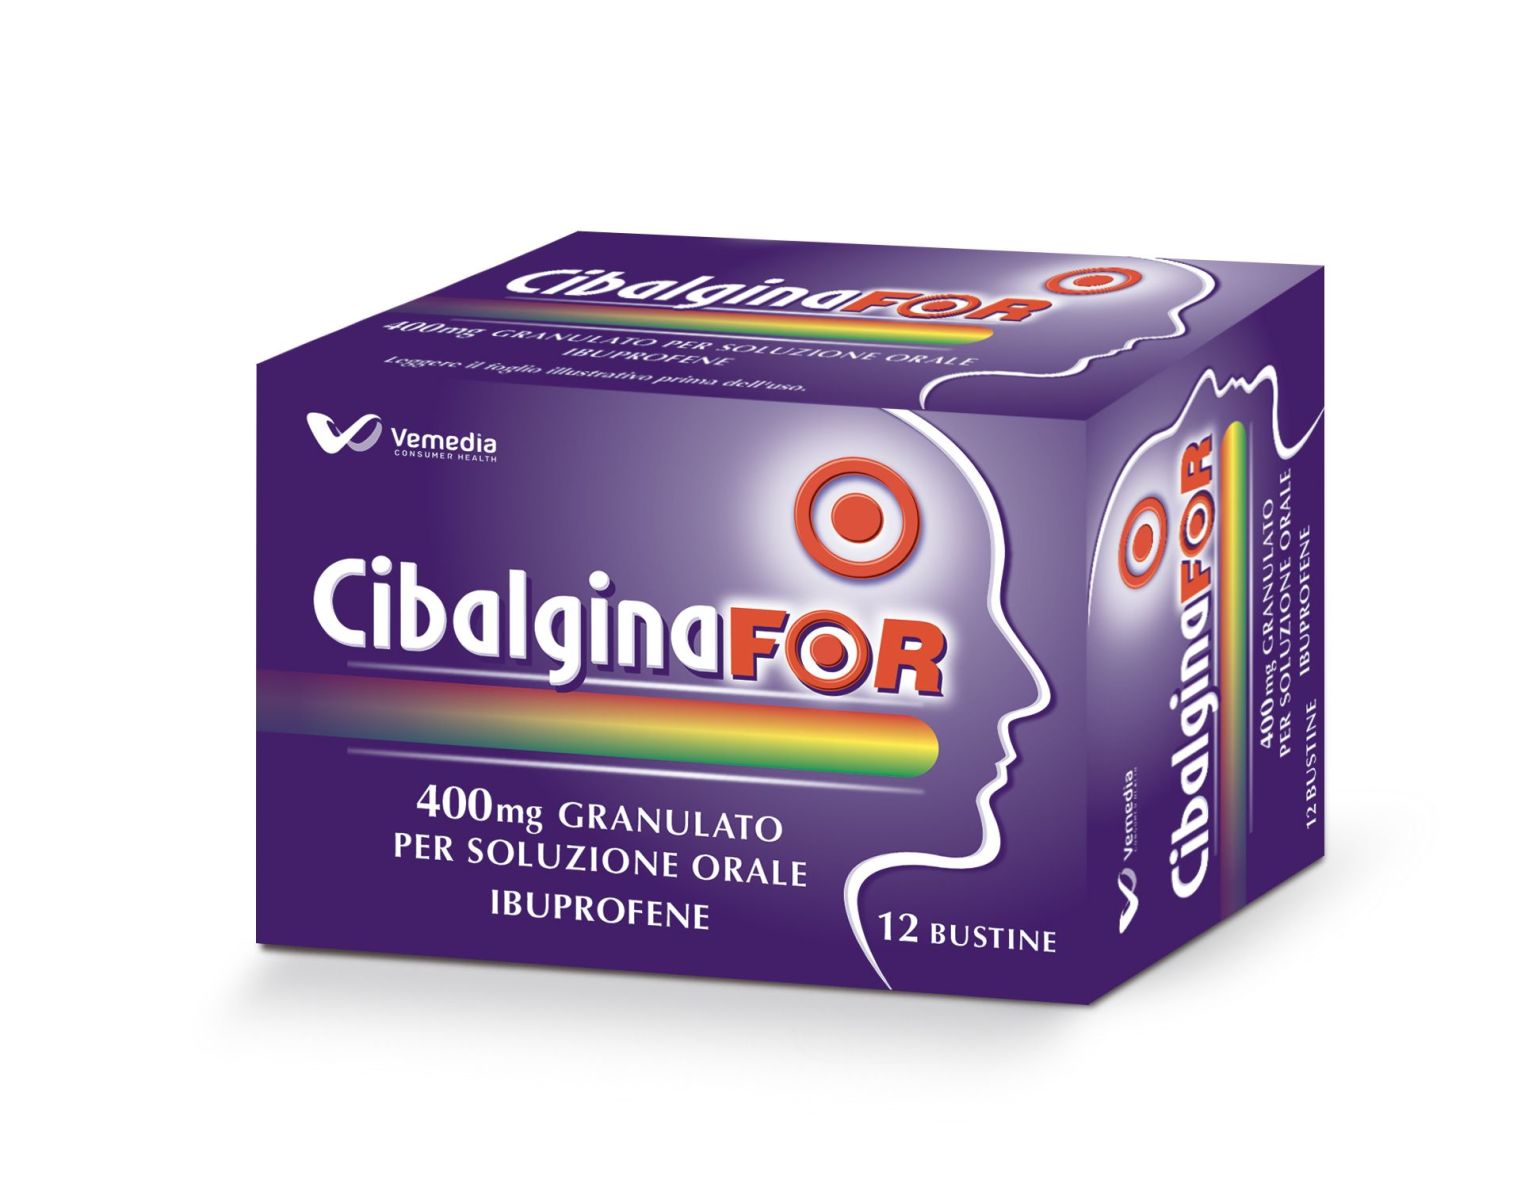 038599015 - Cibalginafor 400mg granulato Ibuprofene Antidolorifico 12 bustine - 7865505_1.jpg